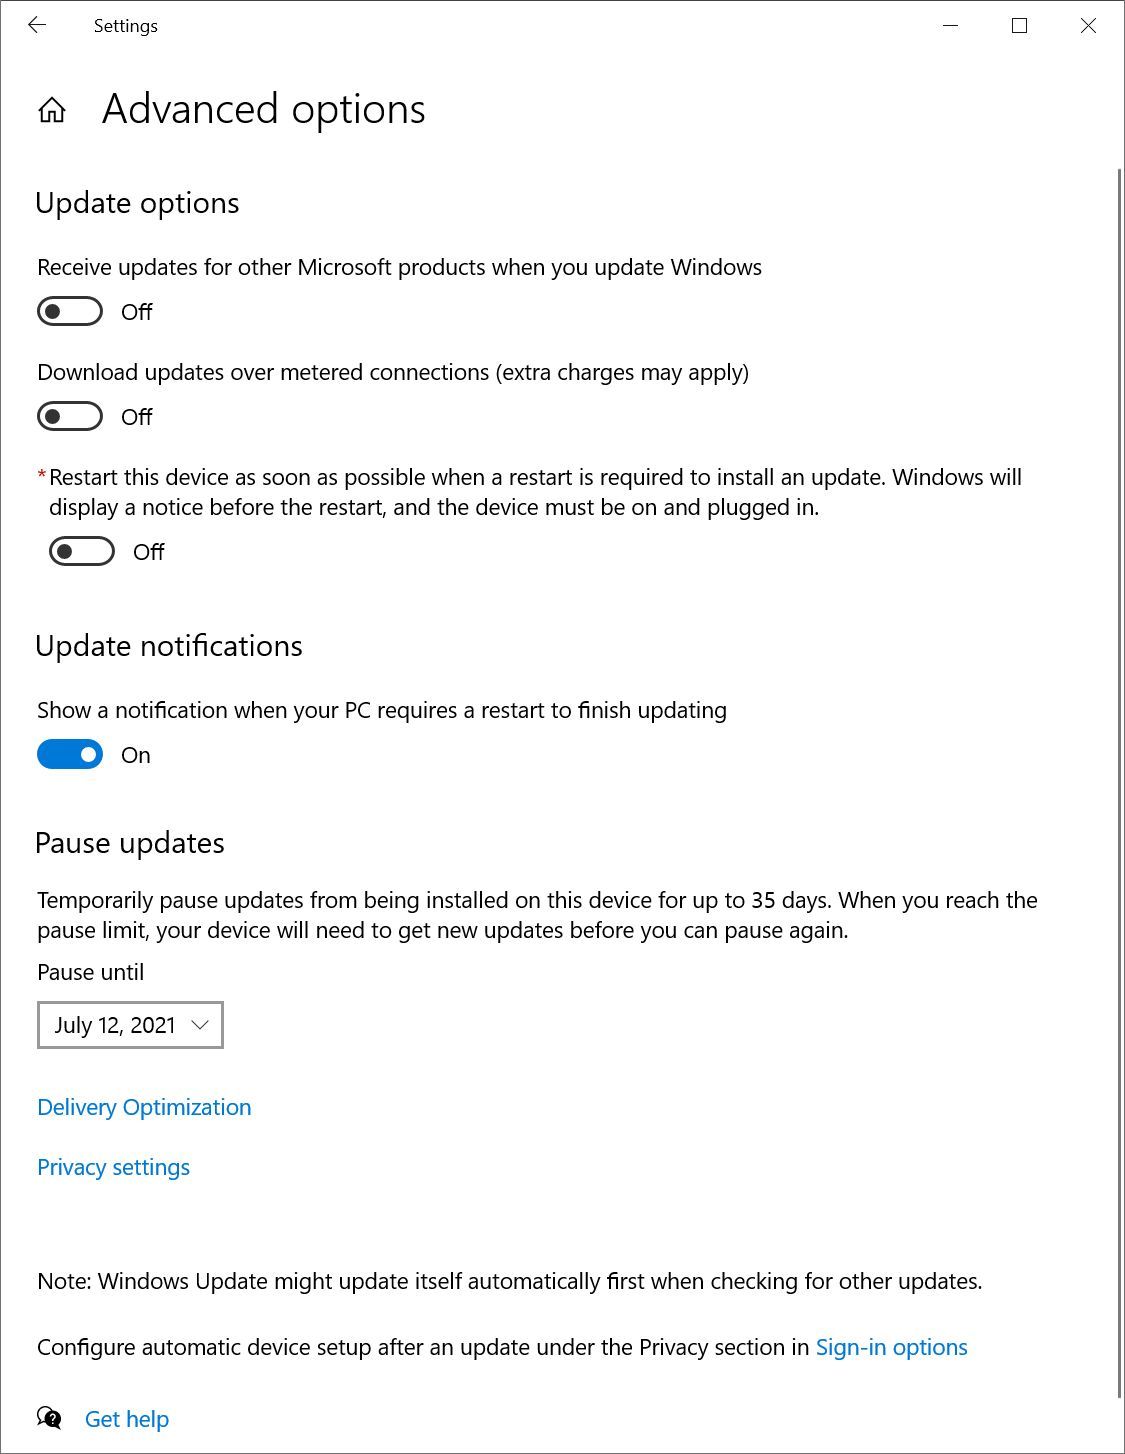 Advanced options in Windows 10 Windows Update Settings menu.